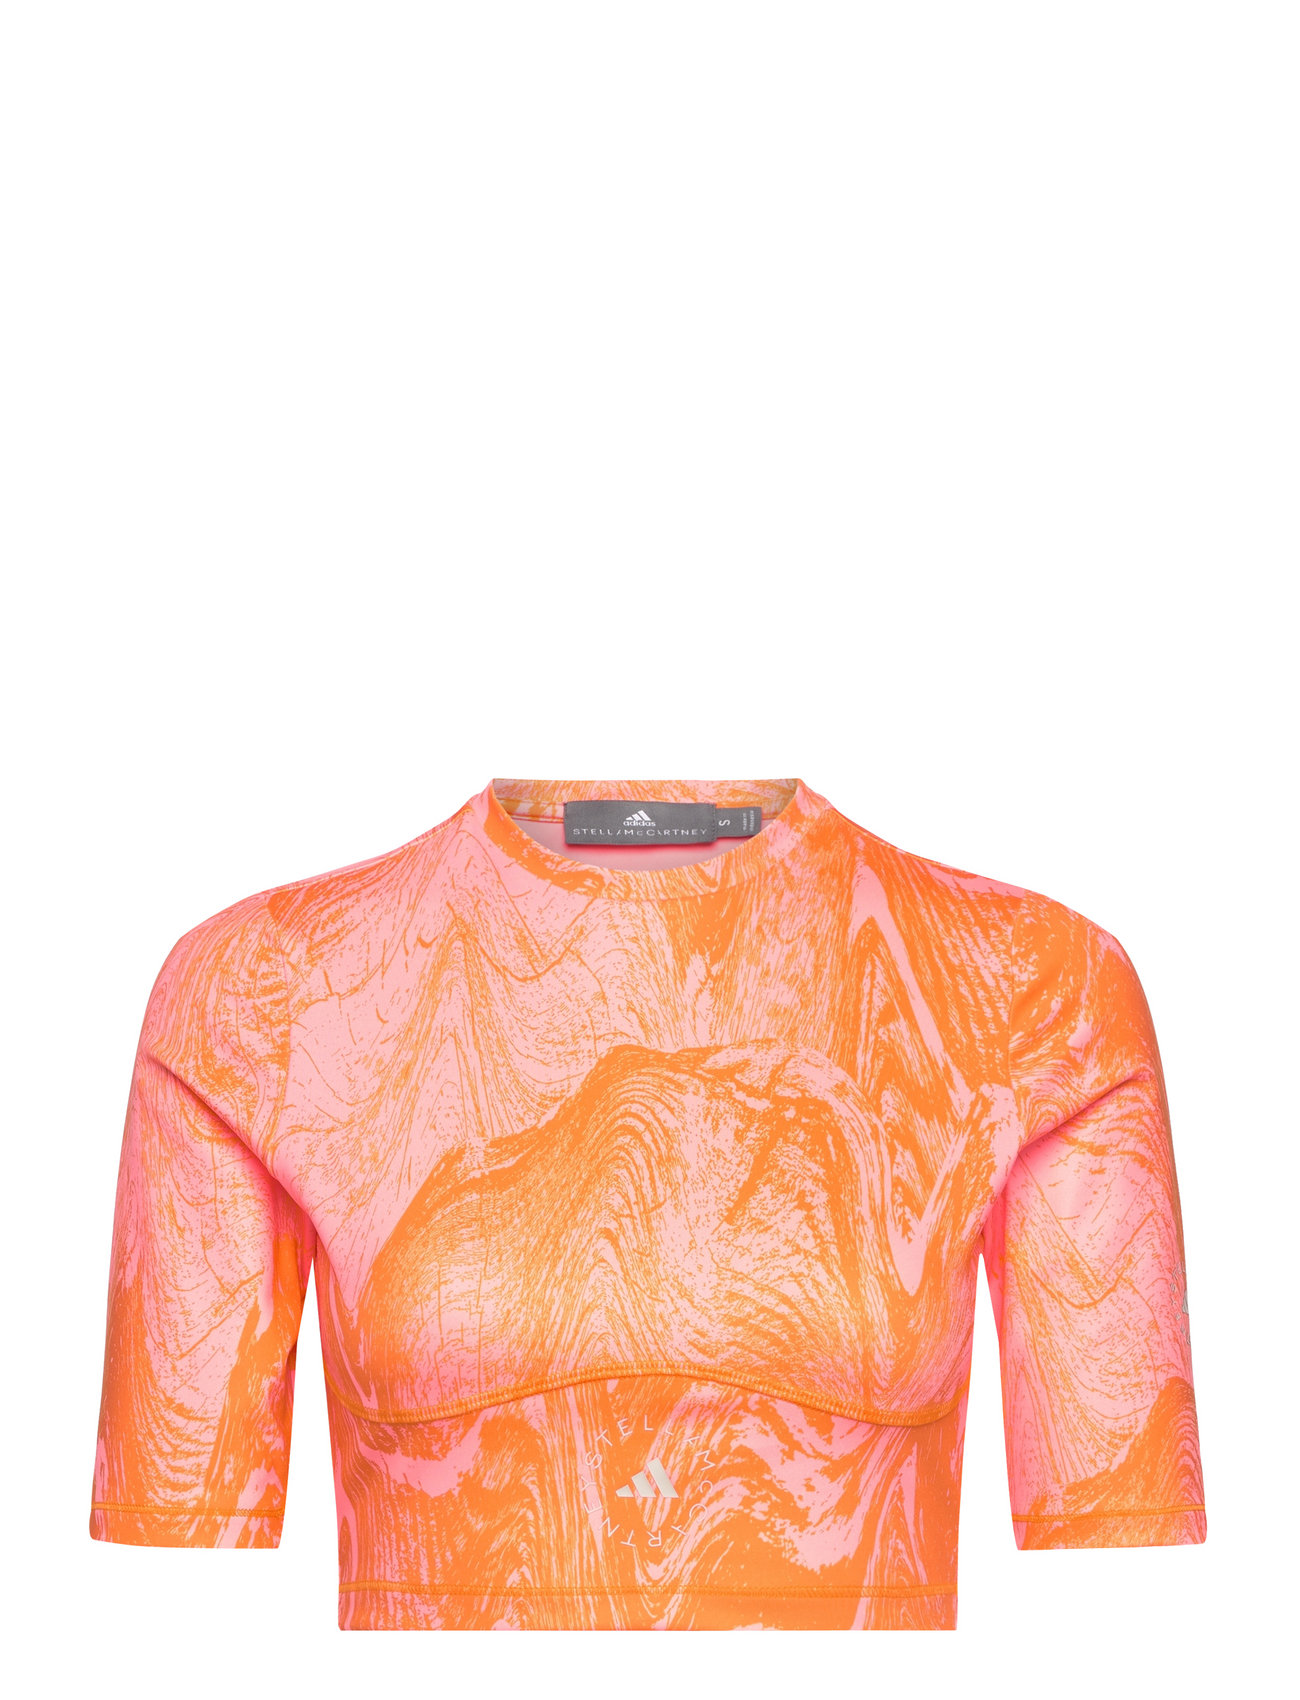 Asmc Tna P Crop Sport Crop Tops Short-sleeved Crop Tops Orange Adidas By Stella McCartney